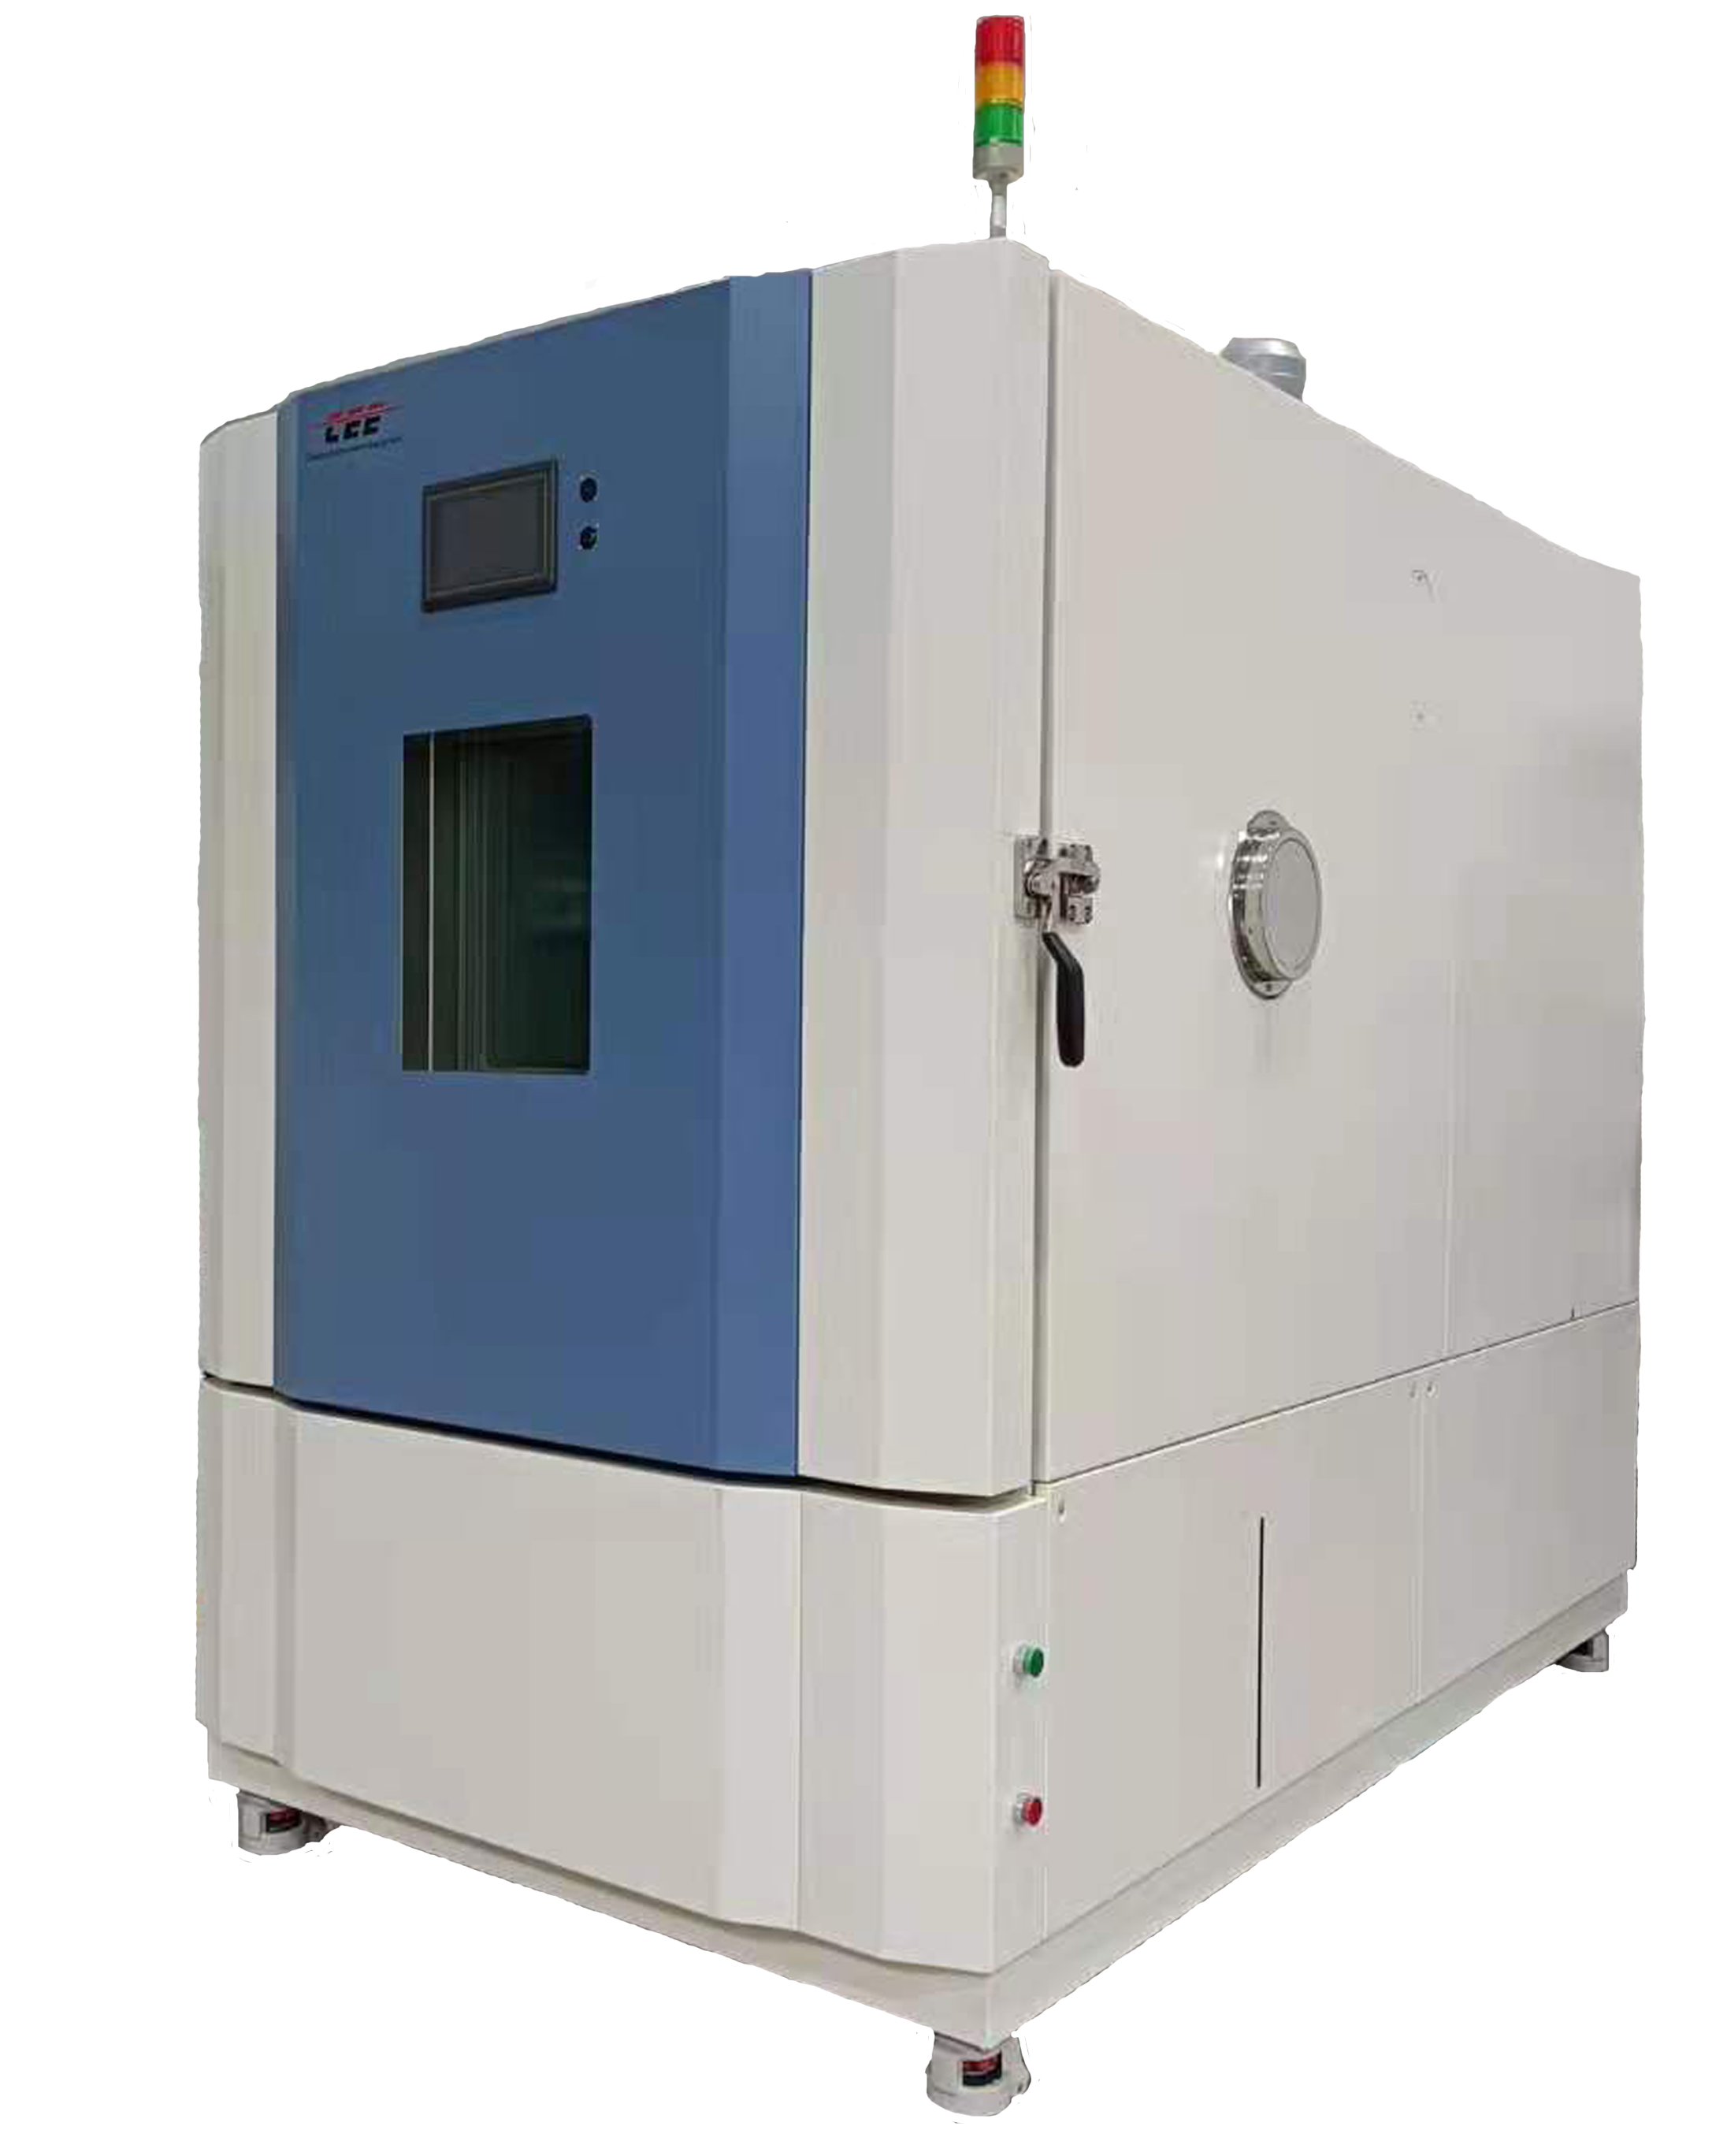 CO2培養箱是一種能提供穩定溫度的細胞培養器